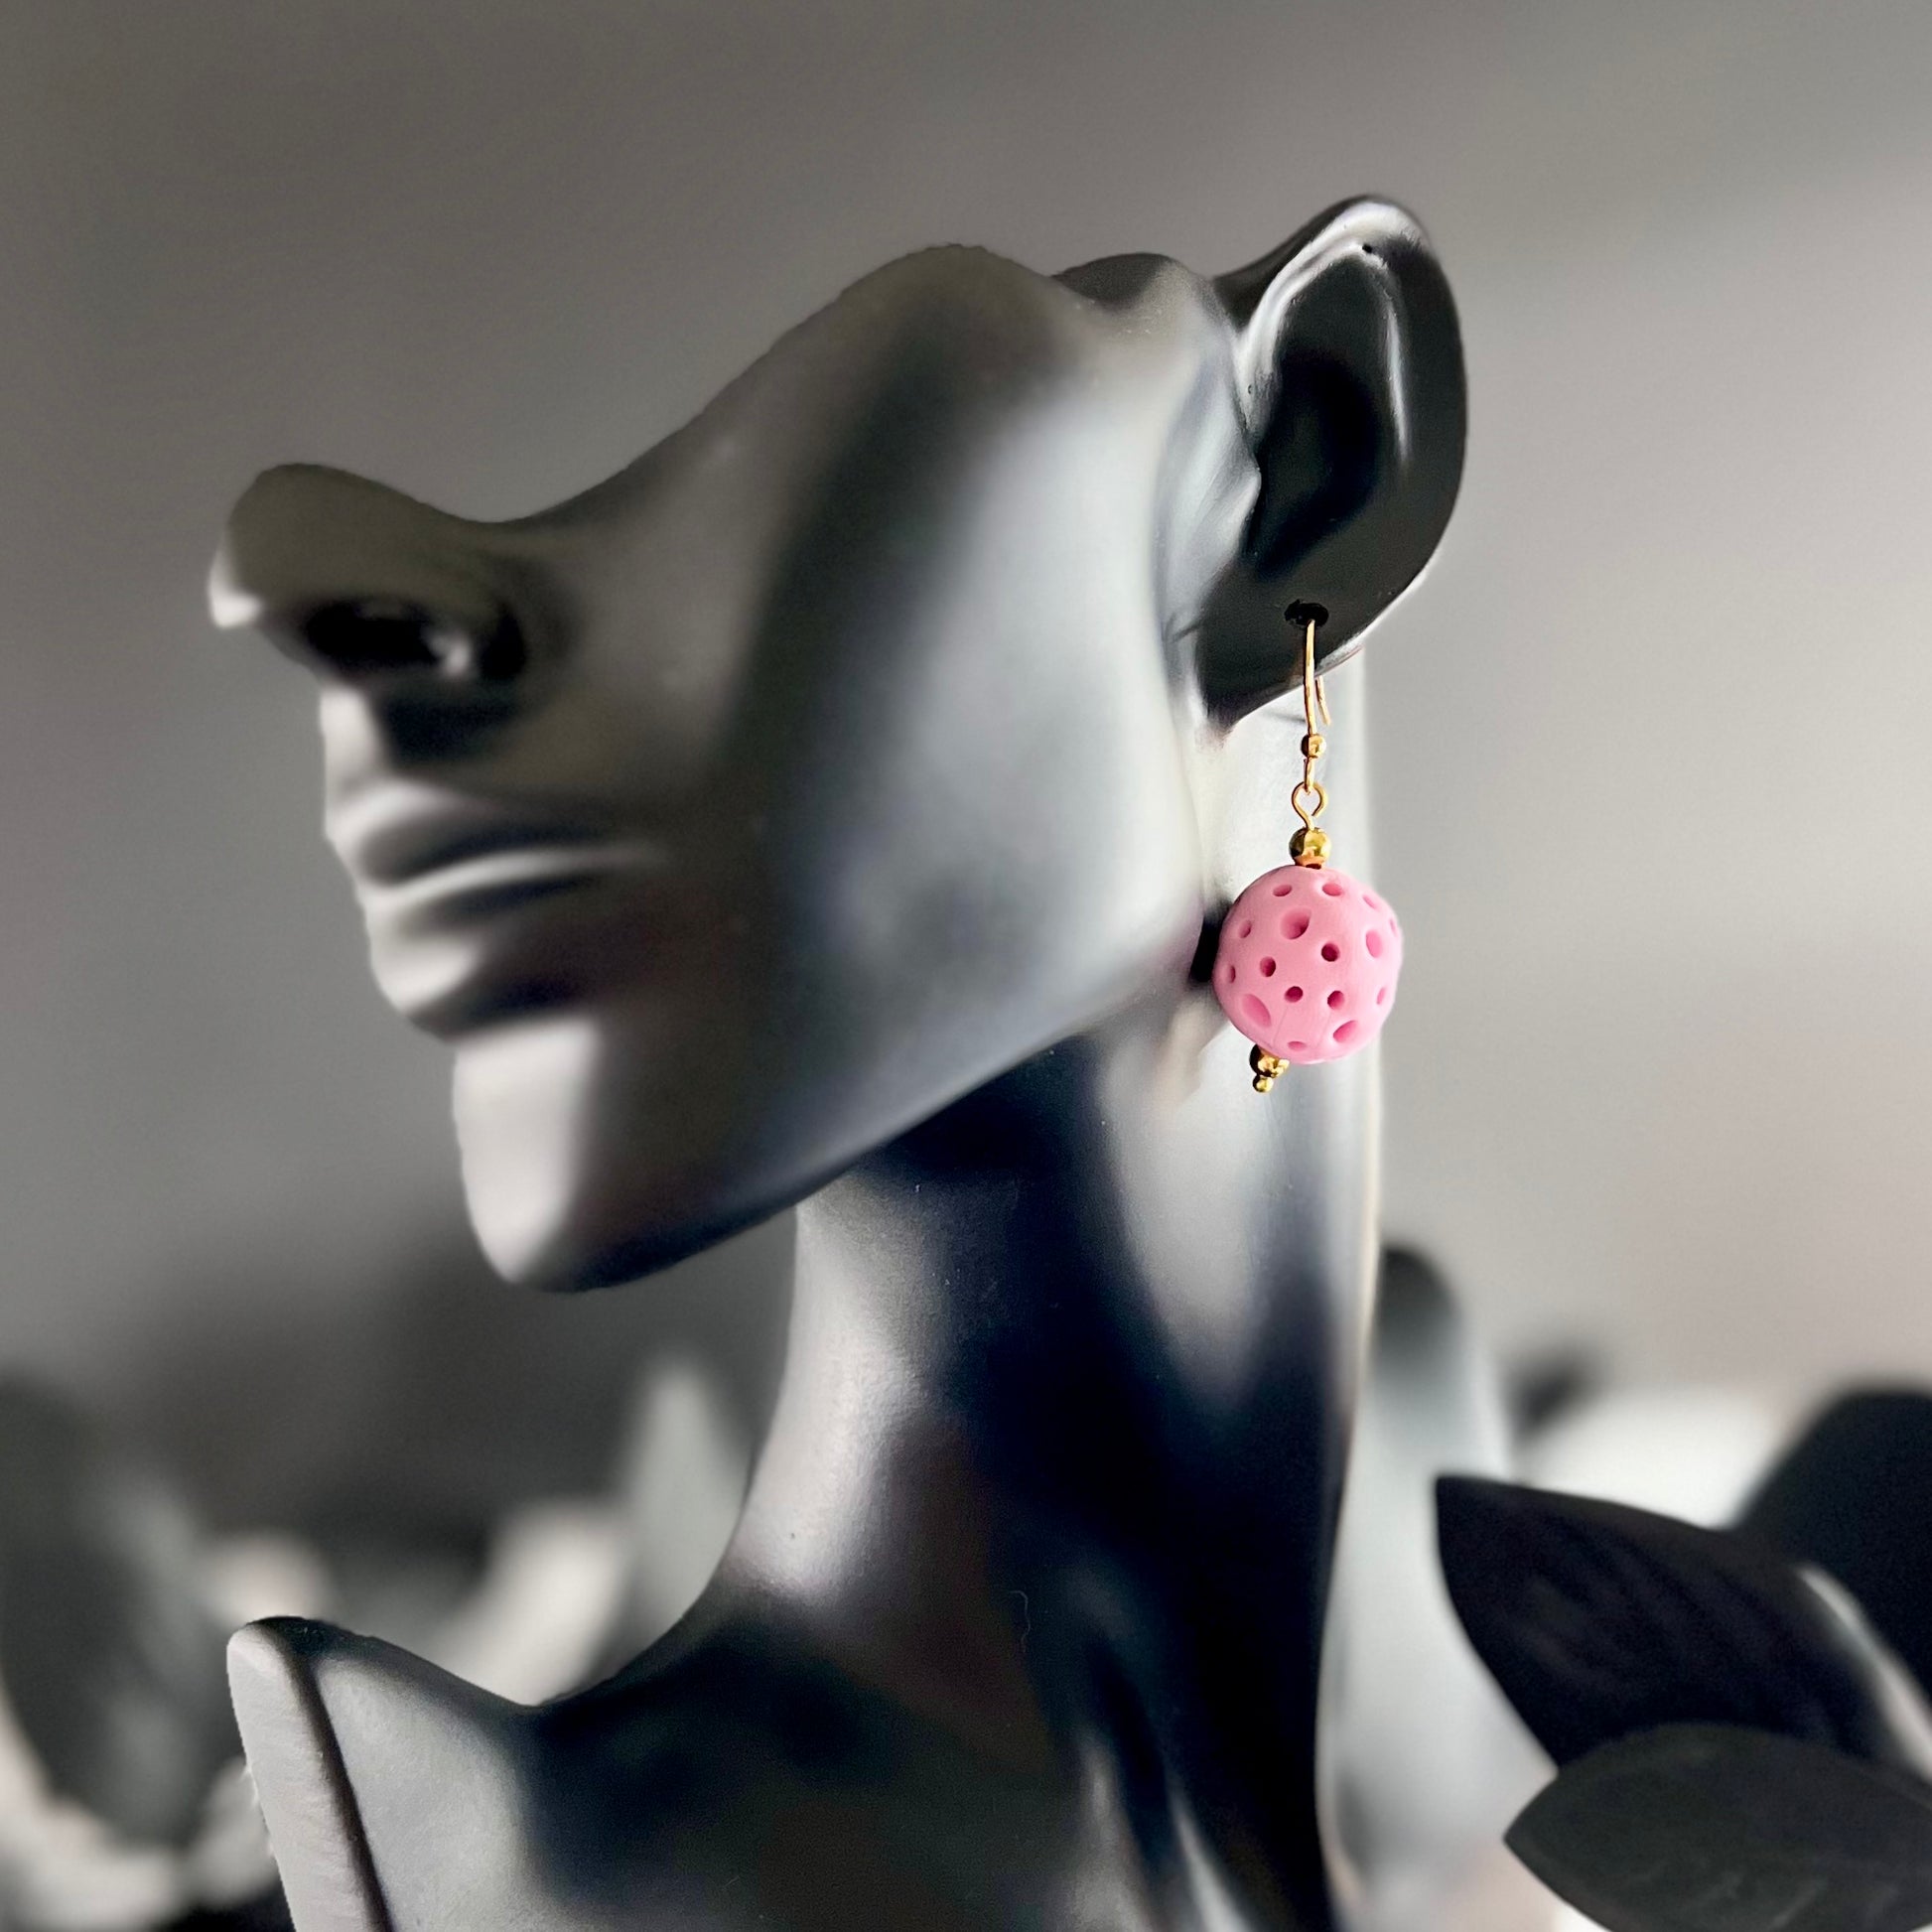 Light pink coral balls medium drop earrings 